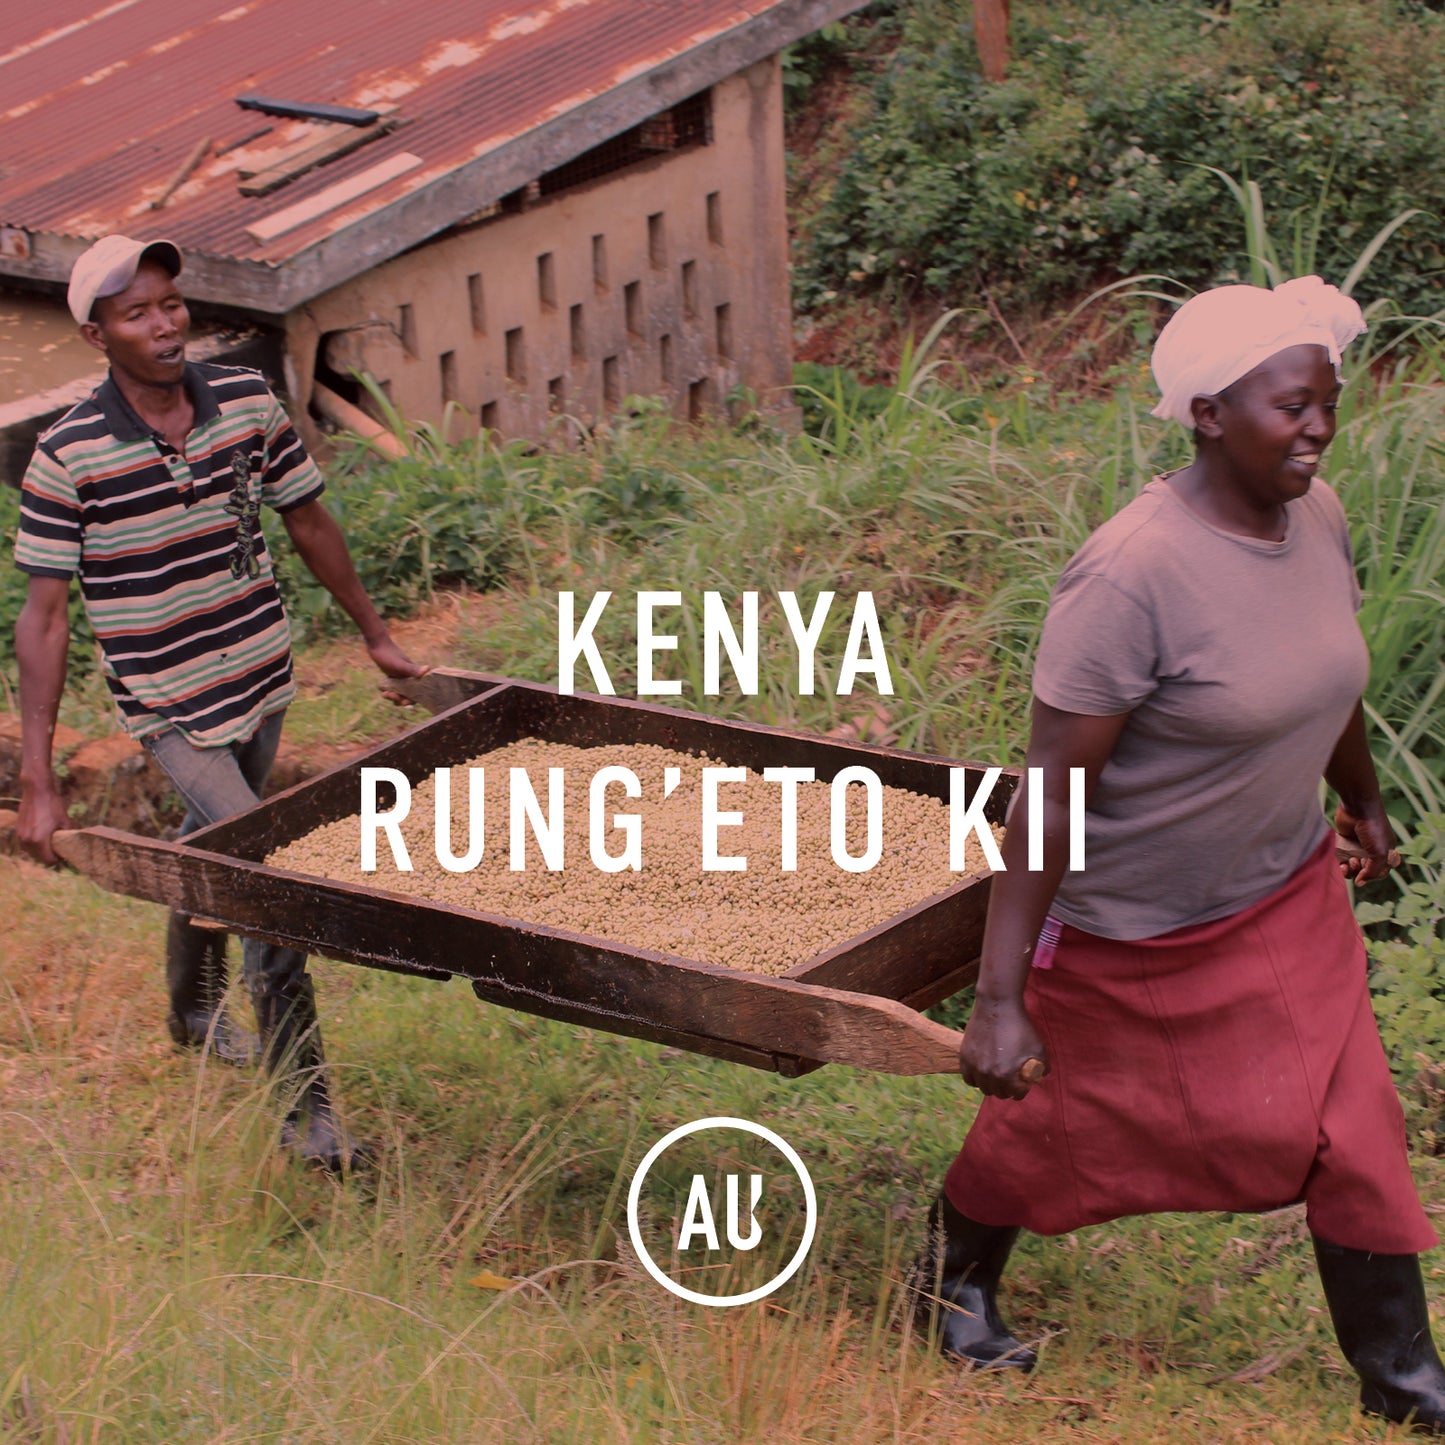 Kenya Rung'eto Kii